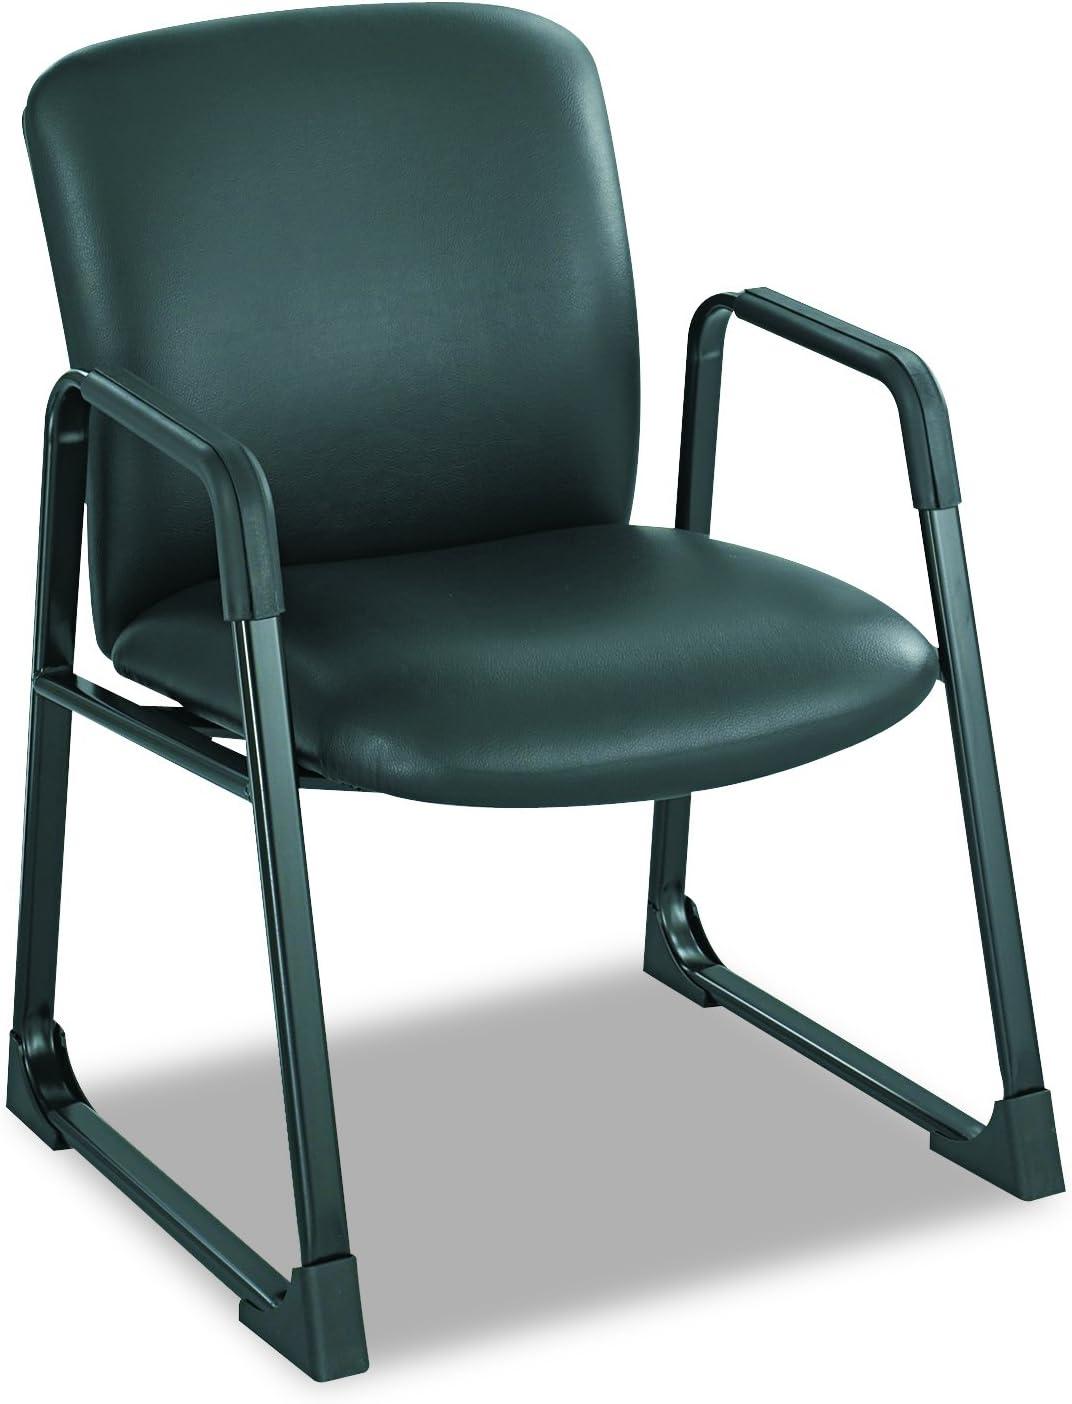 Max Comfort 500 lb Black Vinyl and Steel Swivel Guest Chair